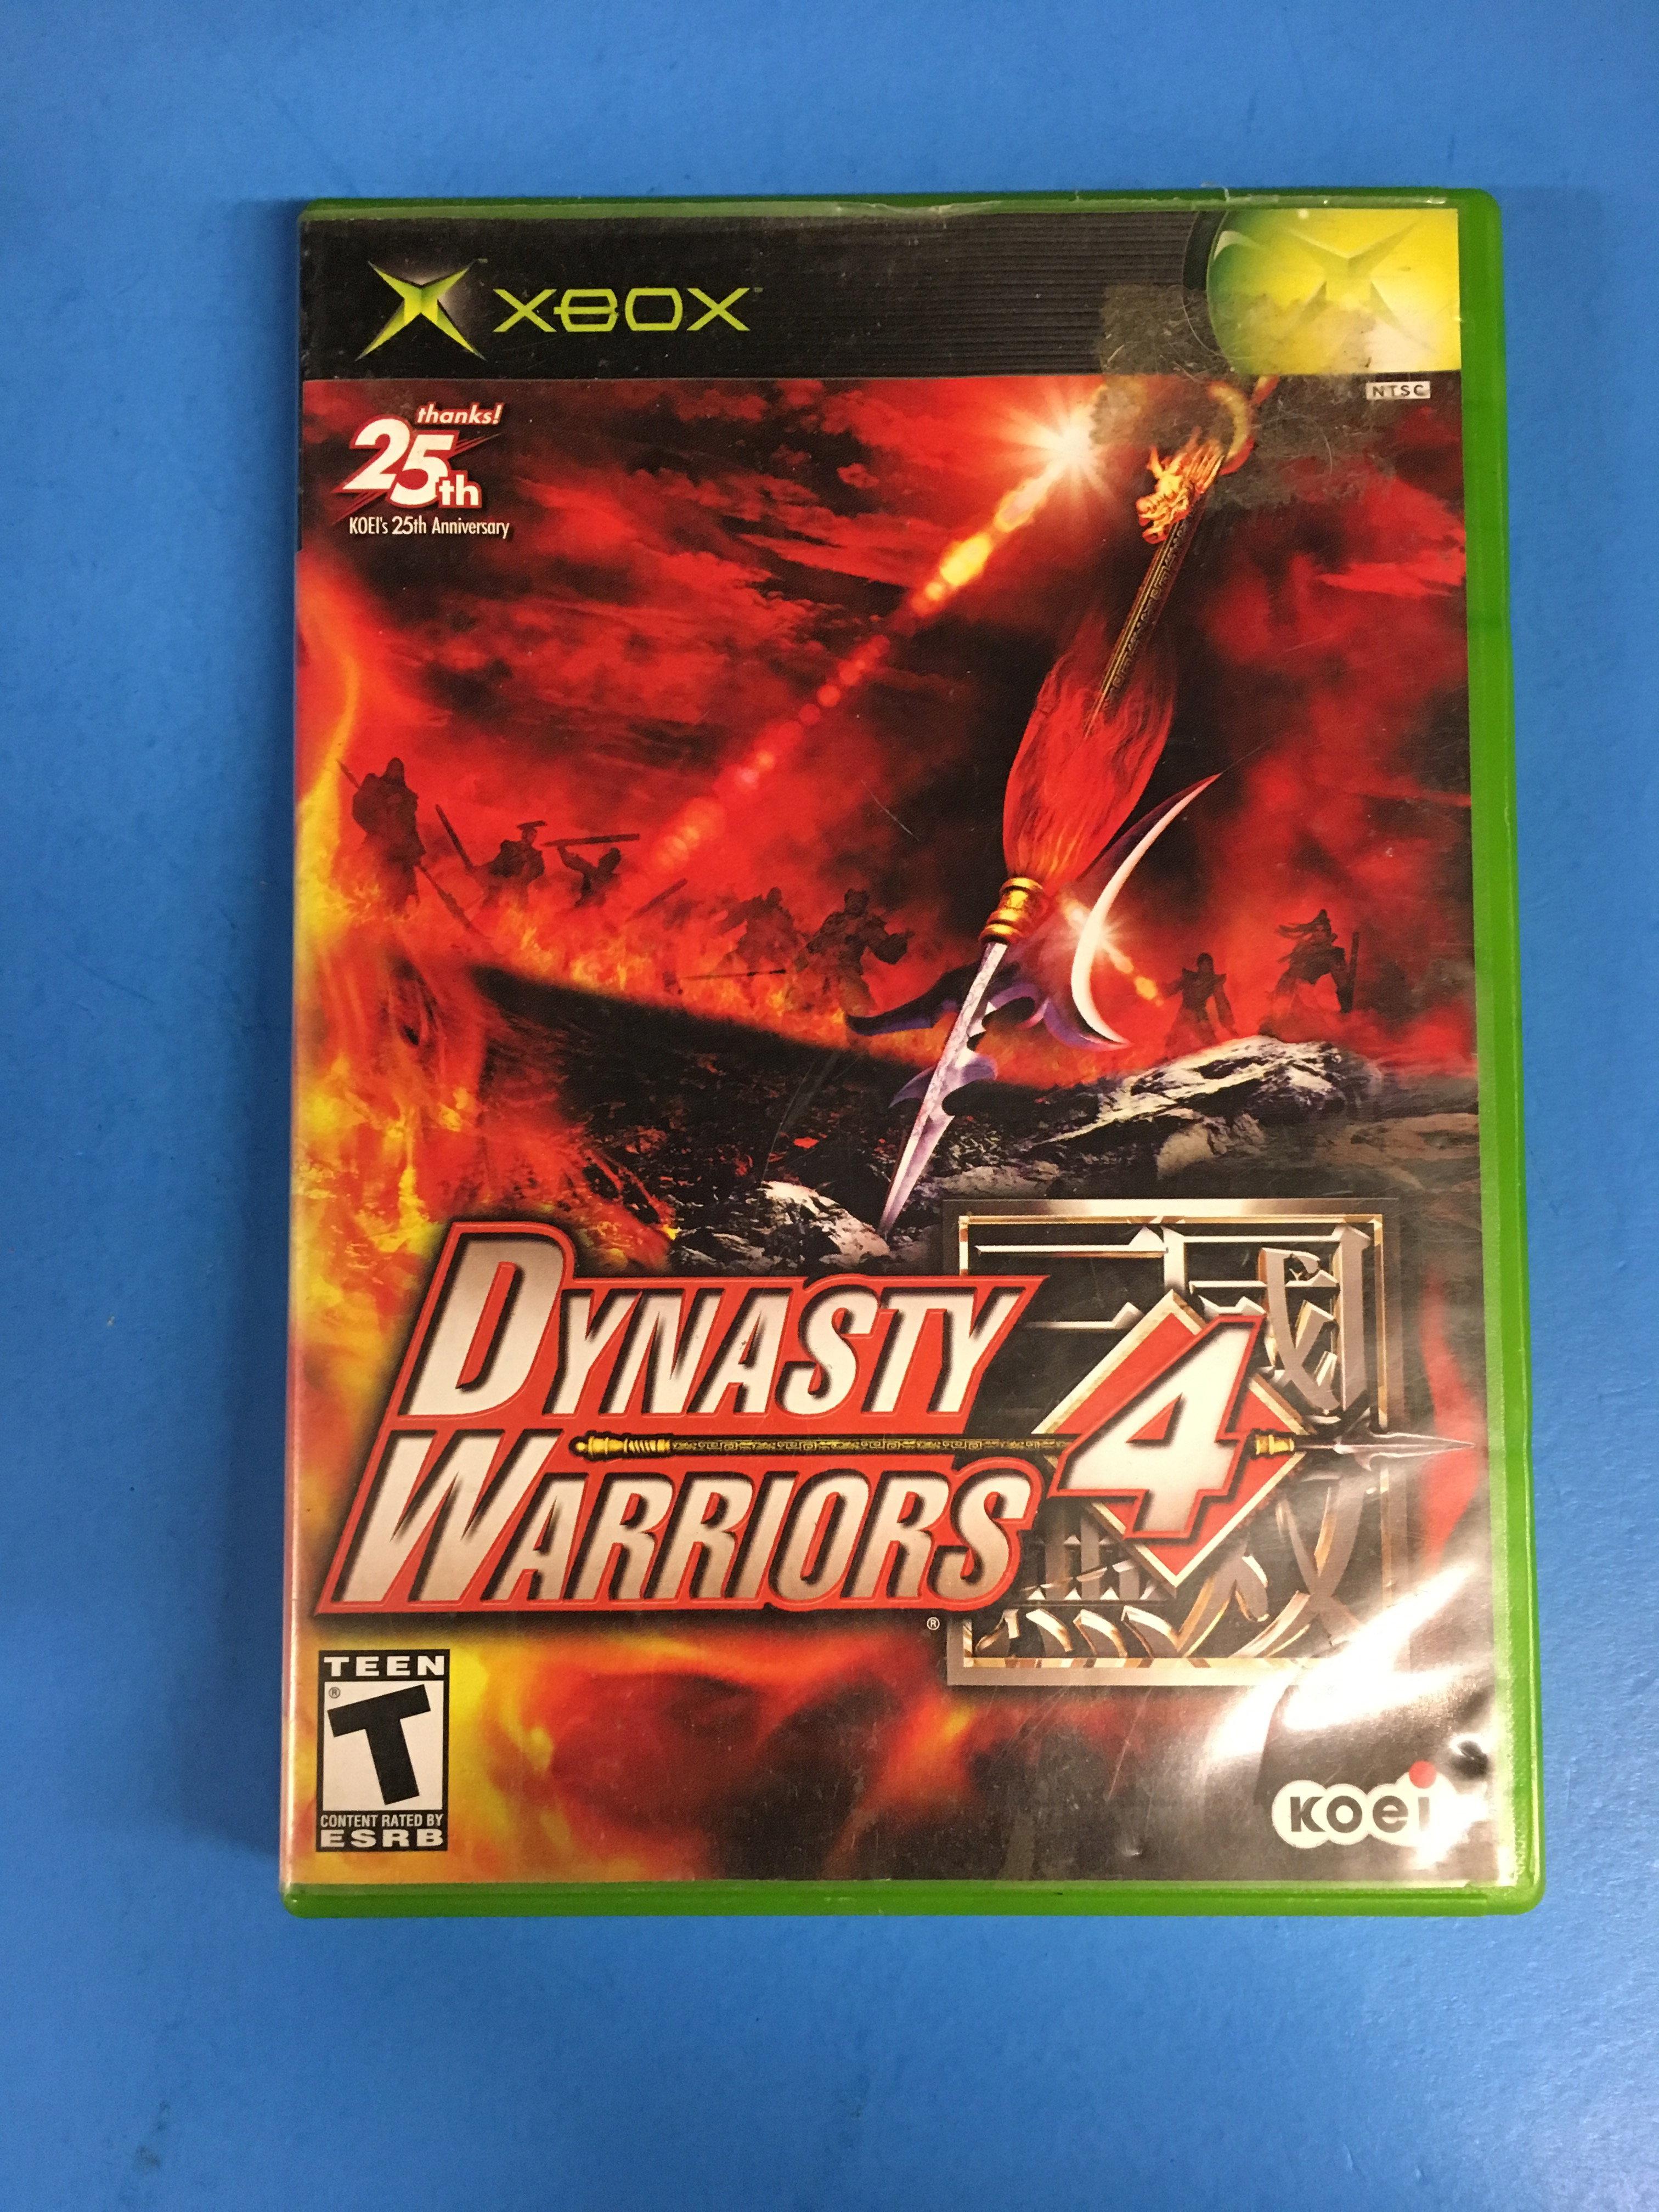 Original Xbox Dynasty Warriors 4 Video Game